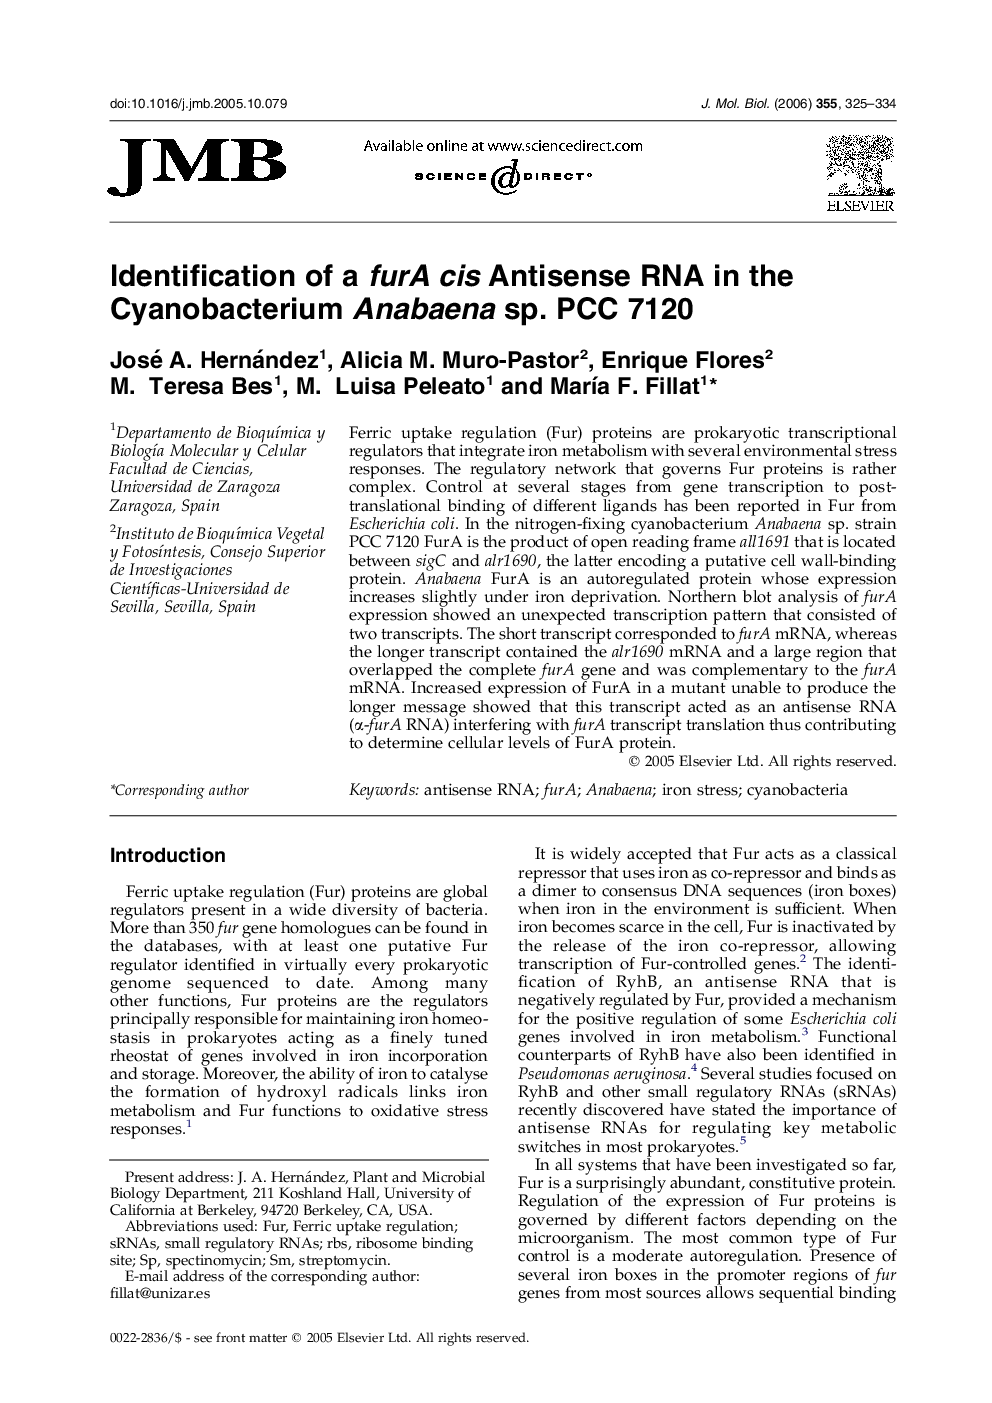 Identification of a furA cis Antisense RNA in the Cyanobacterium Anabaena sp. PCC 7120